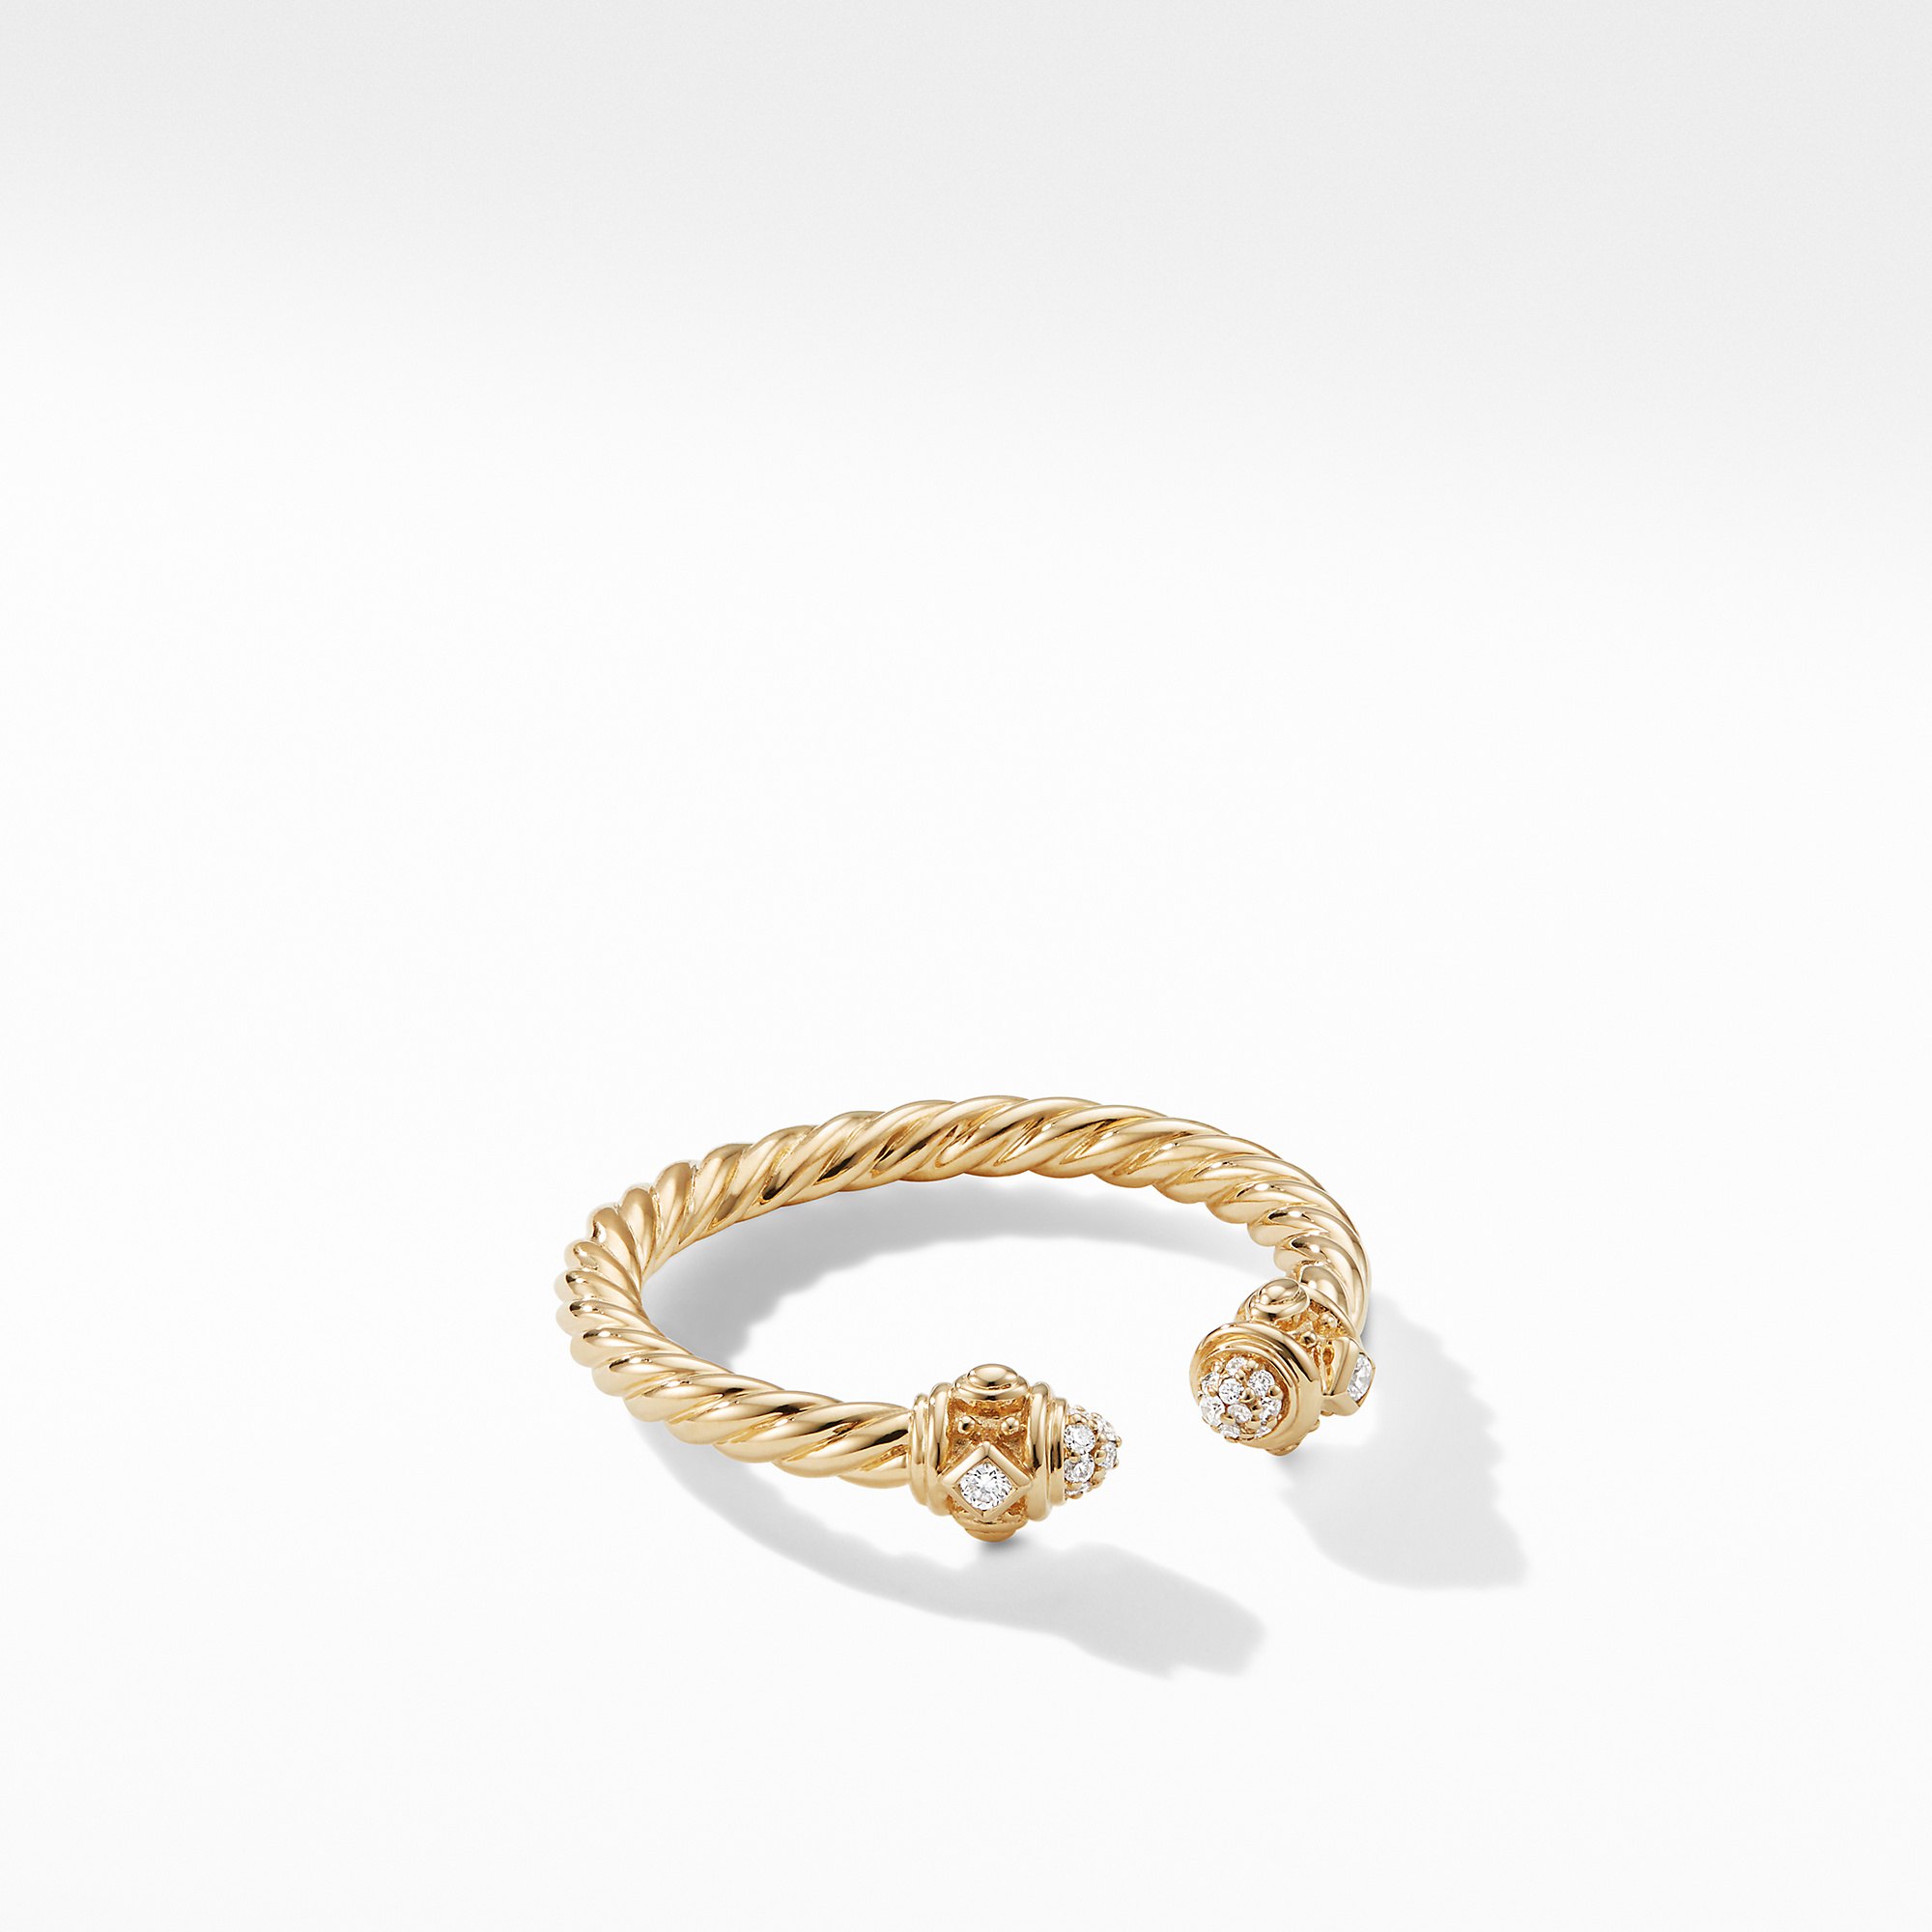 David Yurman Renaissance Ring in 18K Gold with Diamonds, size 7 0